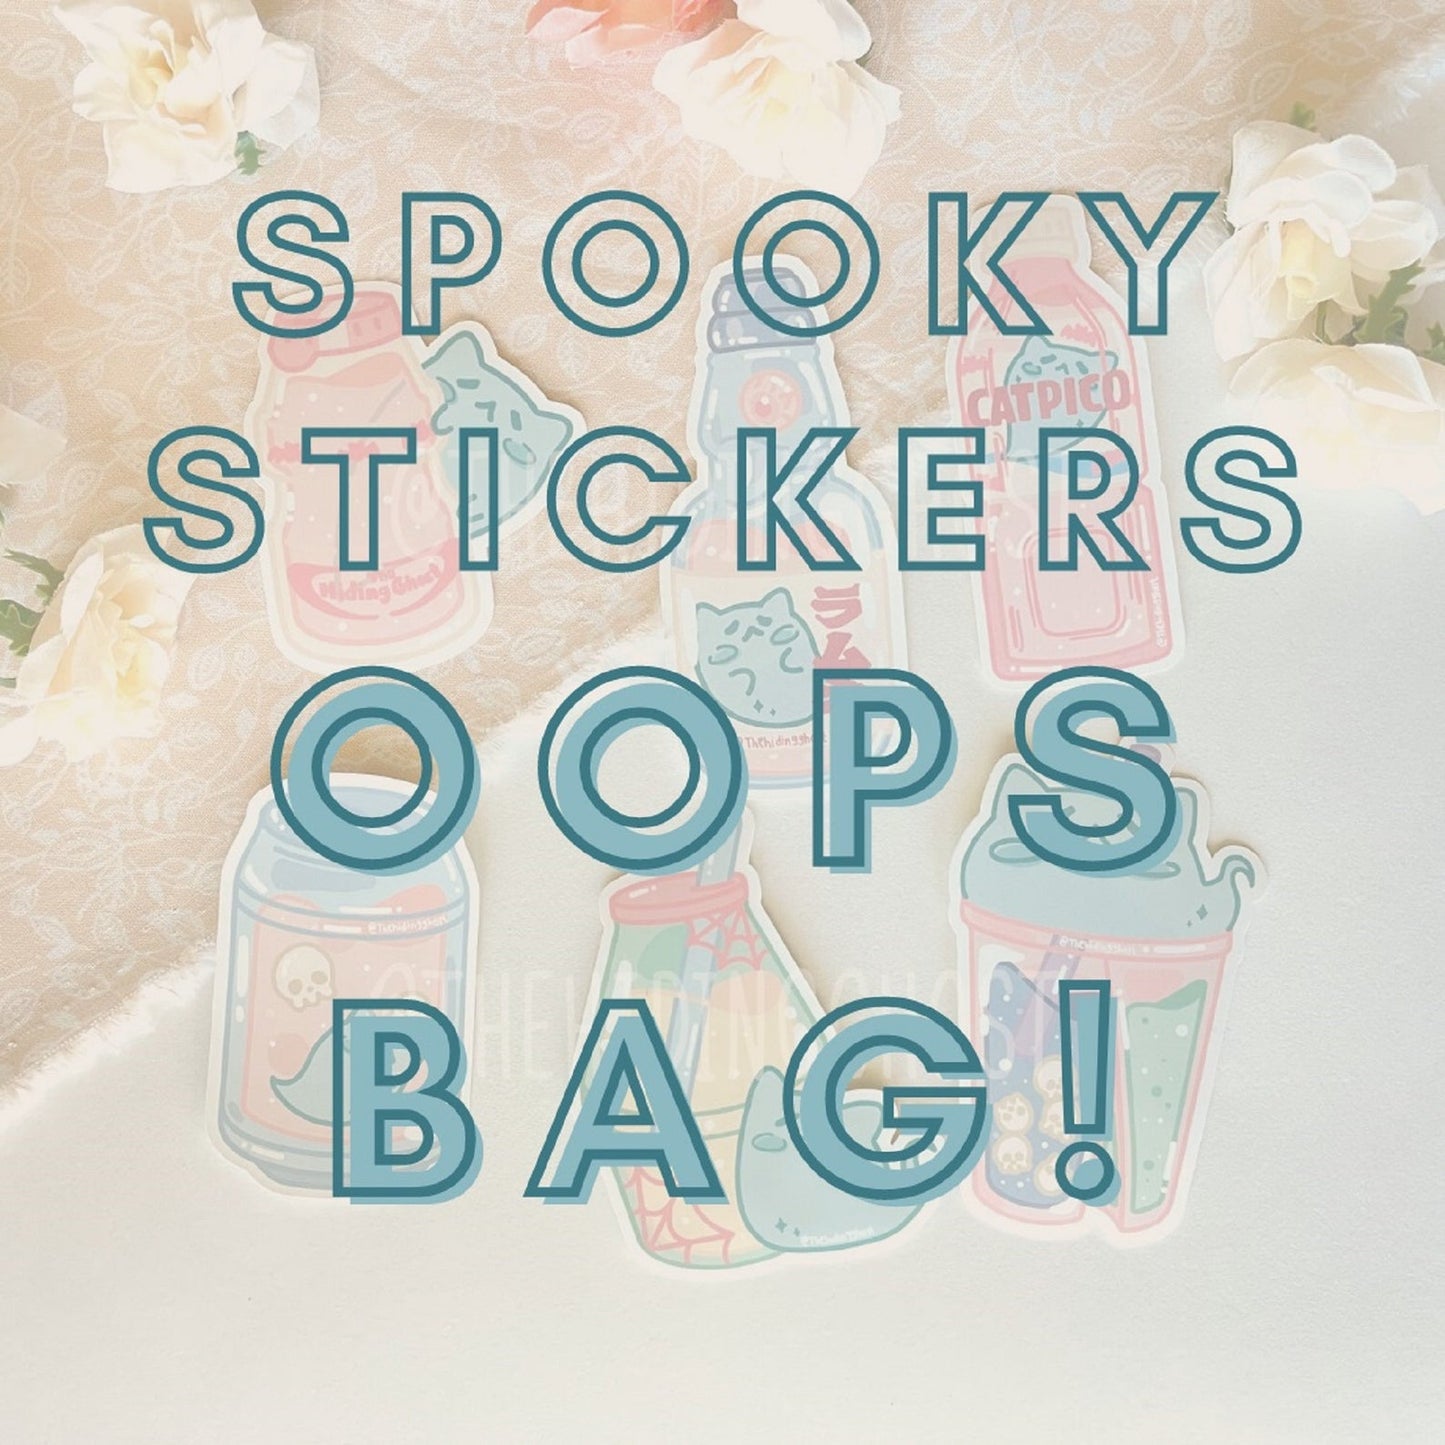 Spooky Stickers OOPS Bag